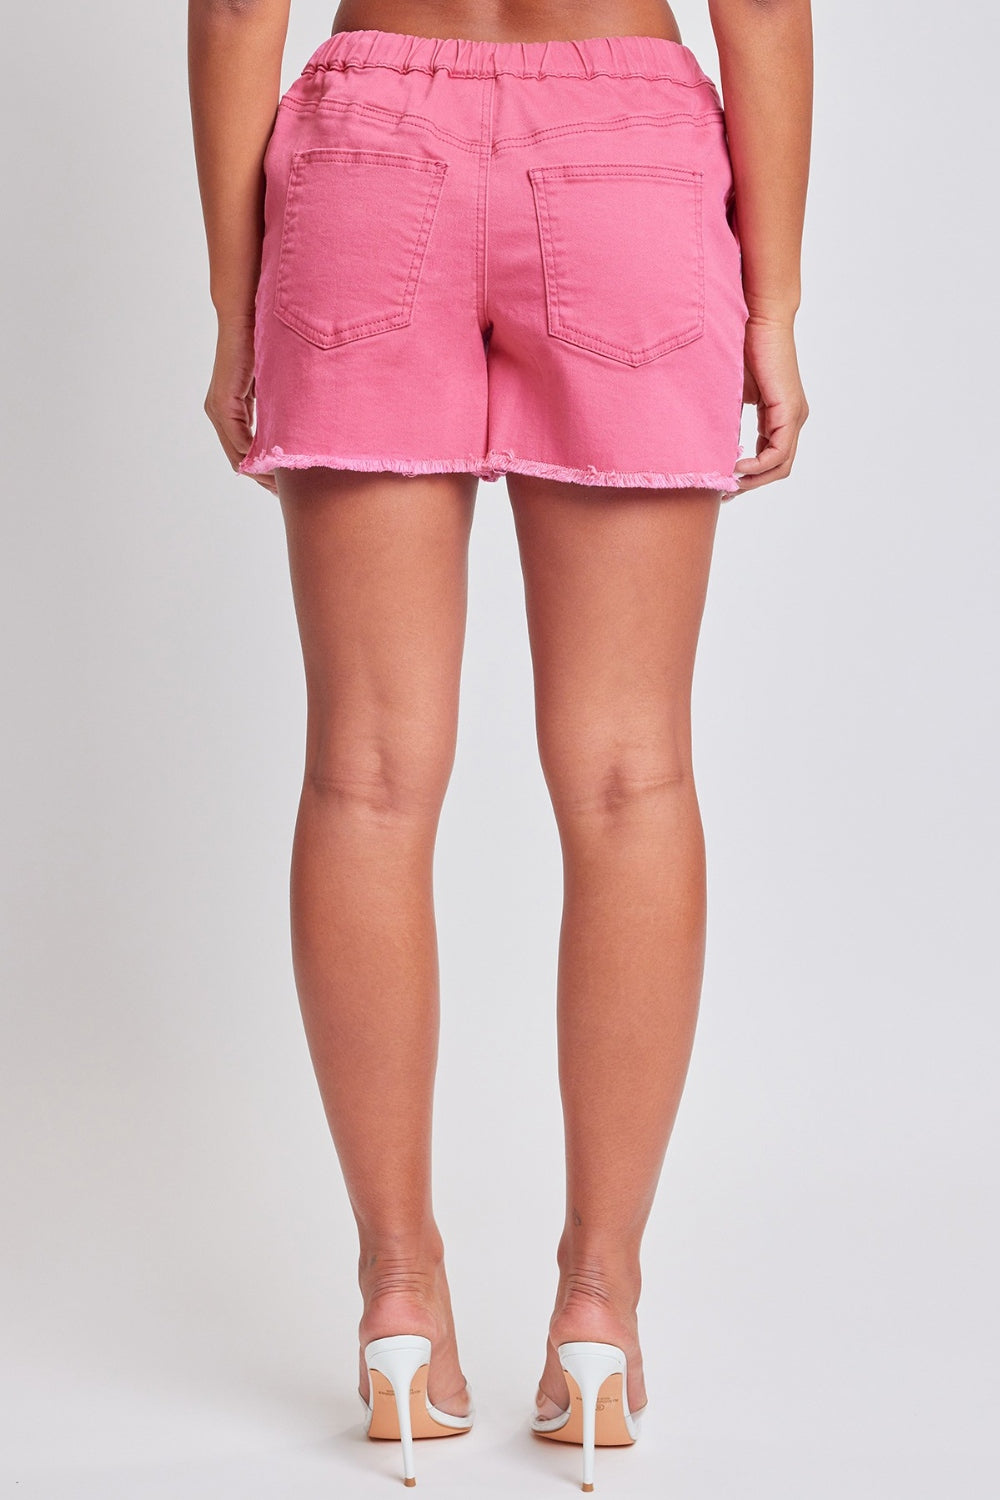 YMI Pink Jeanswear Full Size Drawstring Raw Hem Shorts